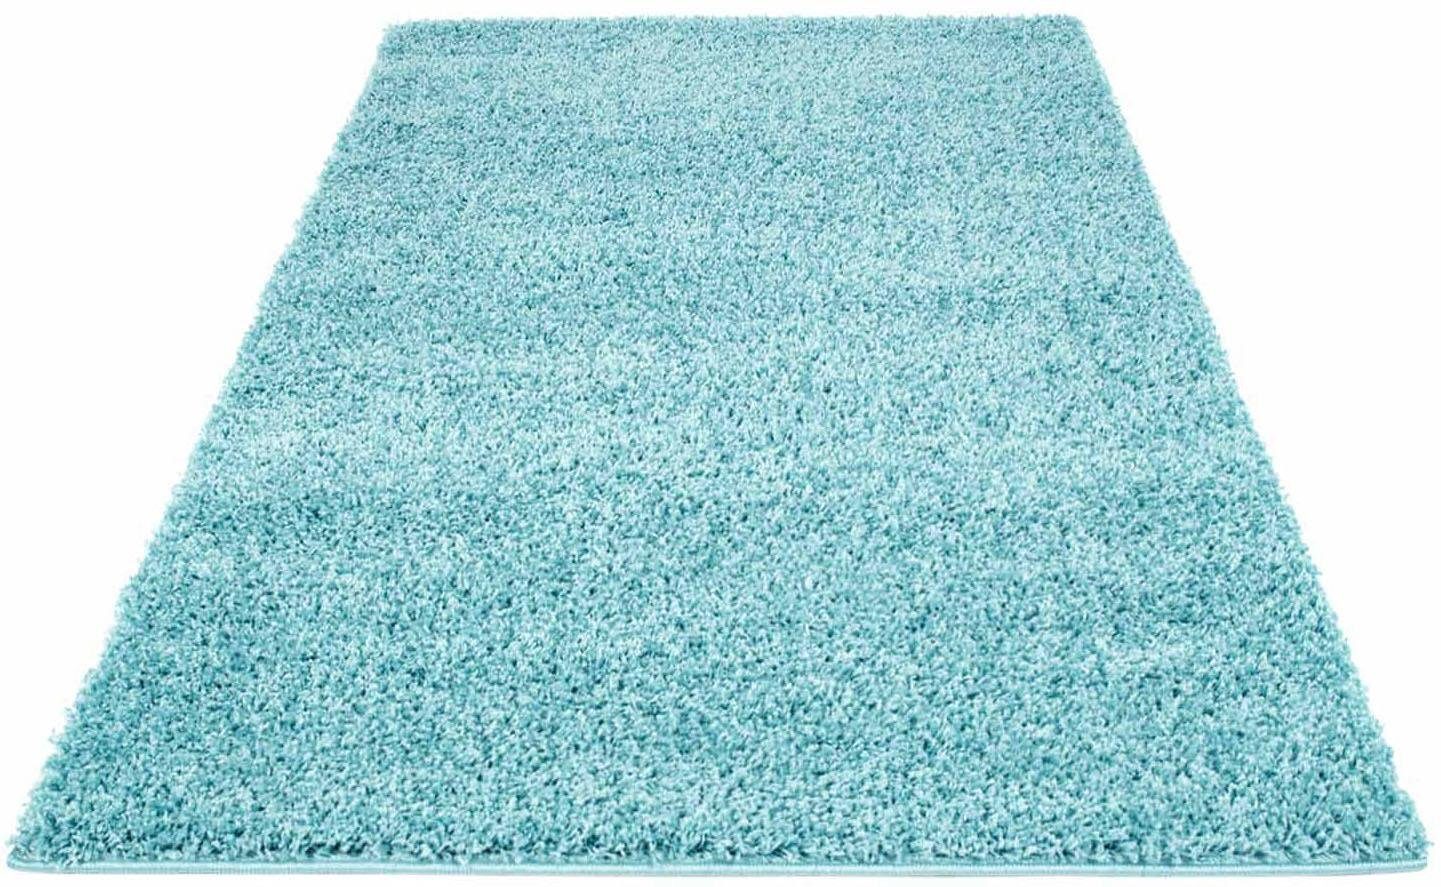 Carpet City Hoogpolig vloerkleed Shaggy Uni 500 Shaggy-vloerkleed, unikleurig, ideaal voor woonkamer & slaapkamer, lange pool, zacht